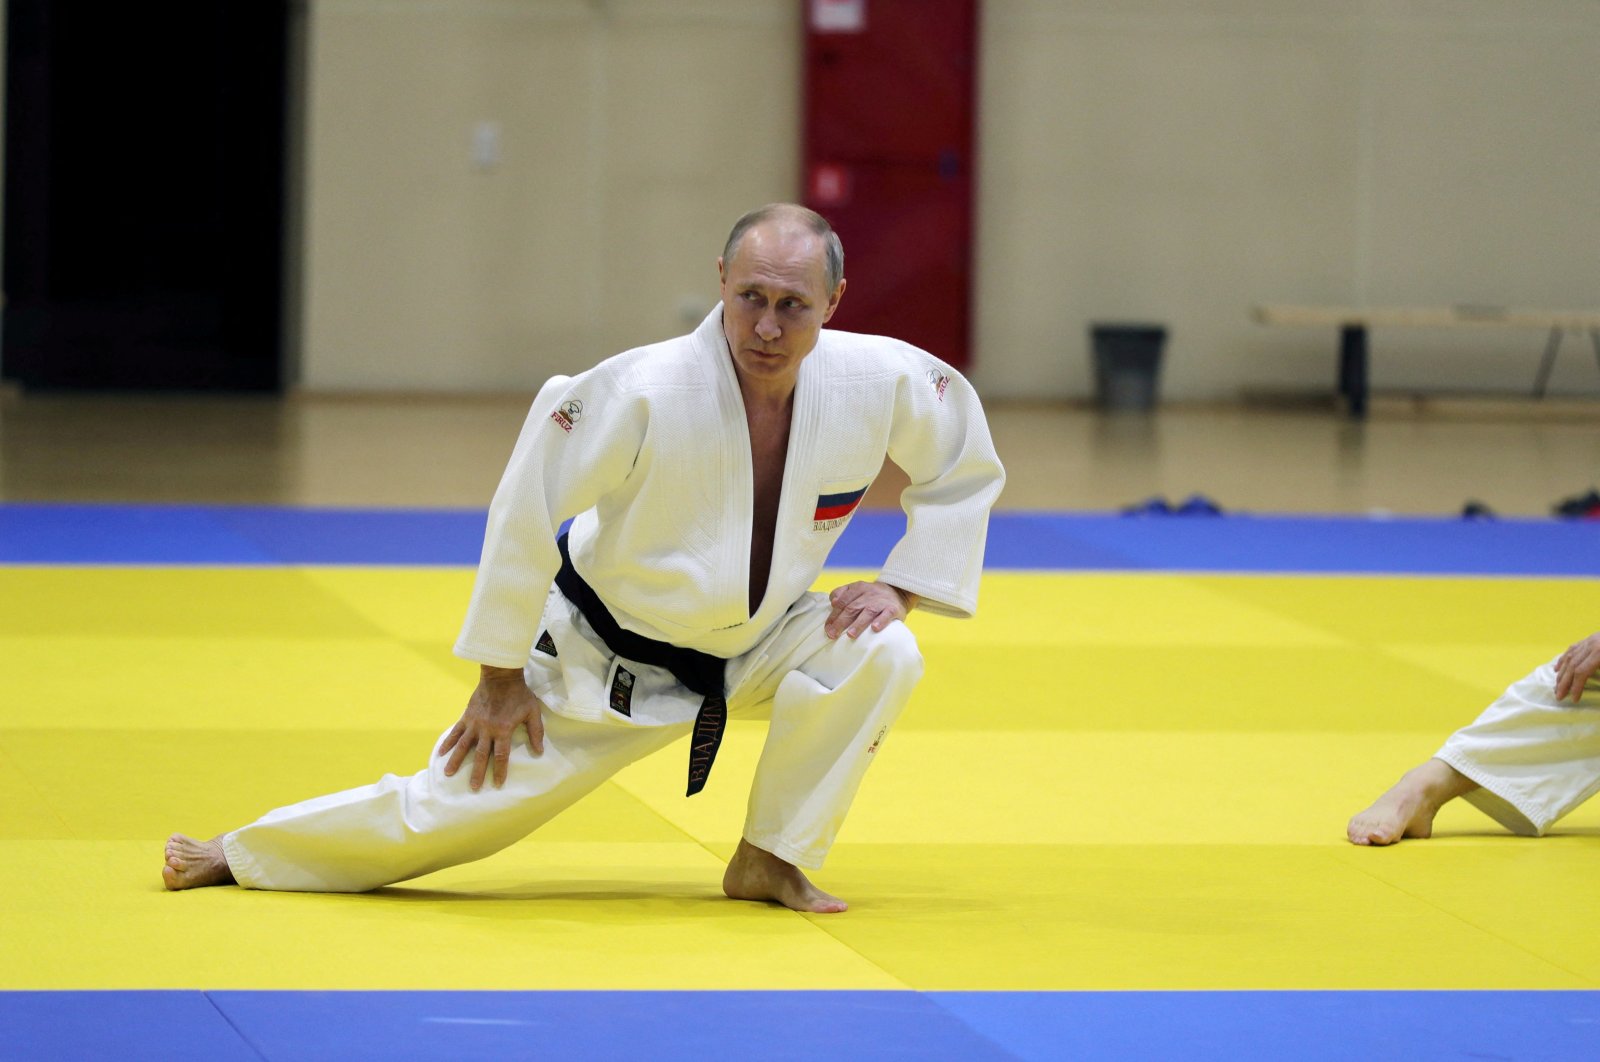 Russian President Vladimir Putin attends a judo training session in Sochi, Russia, Feb. 14, 2019. (Reuters Photo)